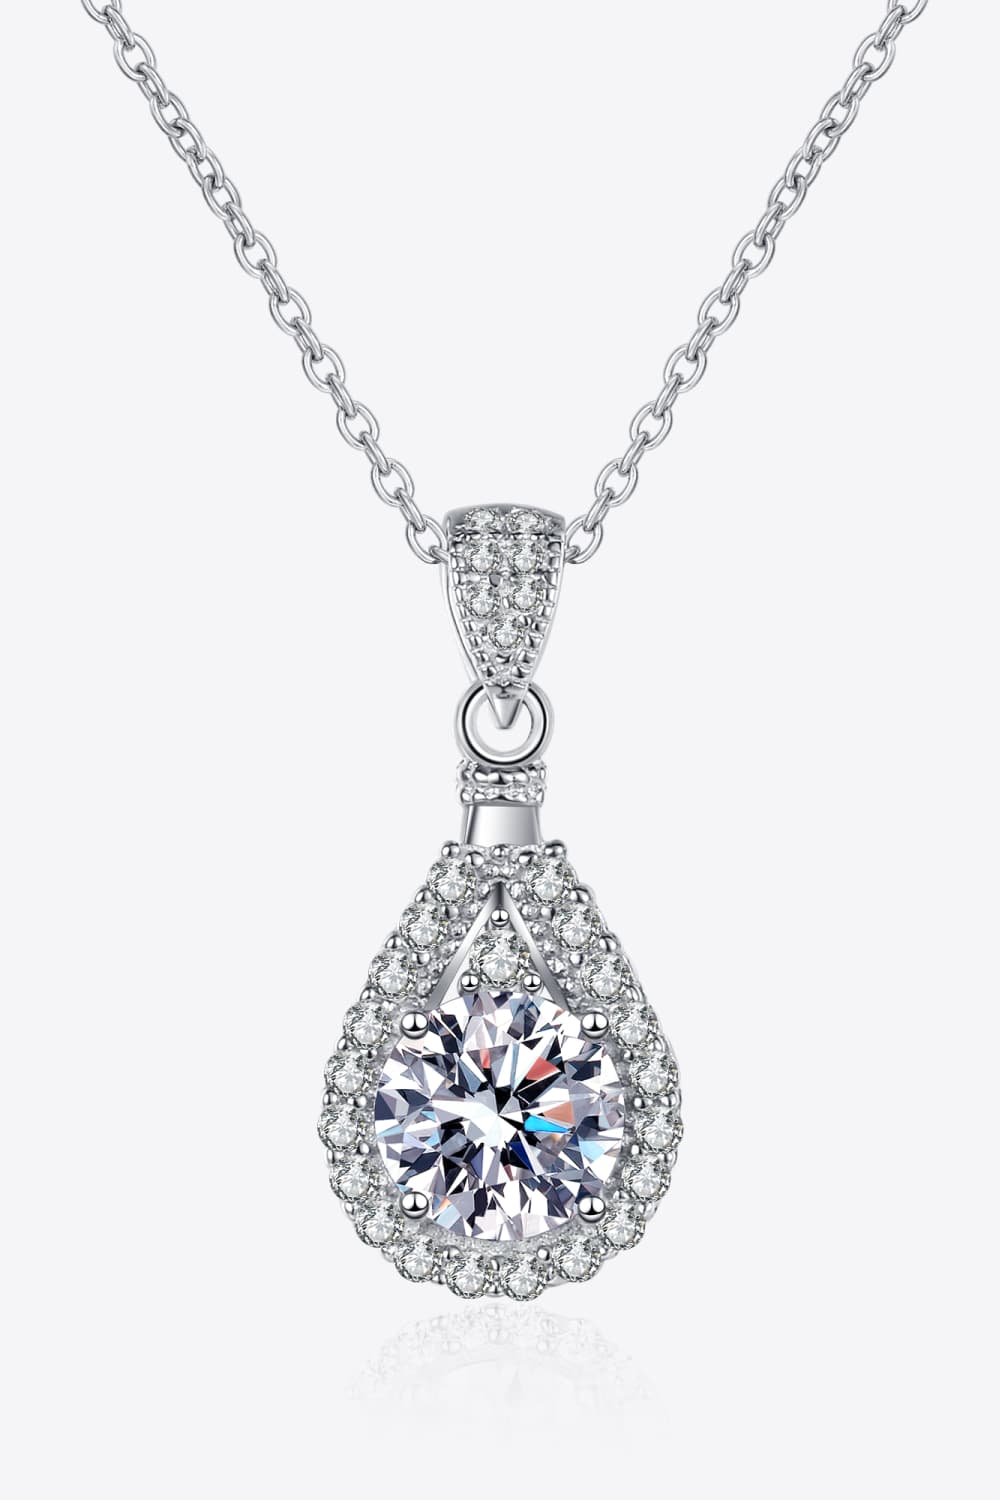 2 Carat Moissanite Teardrop Pendant 925 Sterling Silver Necklace - Kings Crown Jewel Boutique